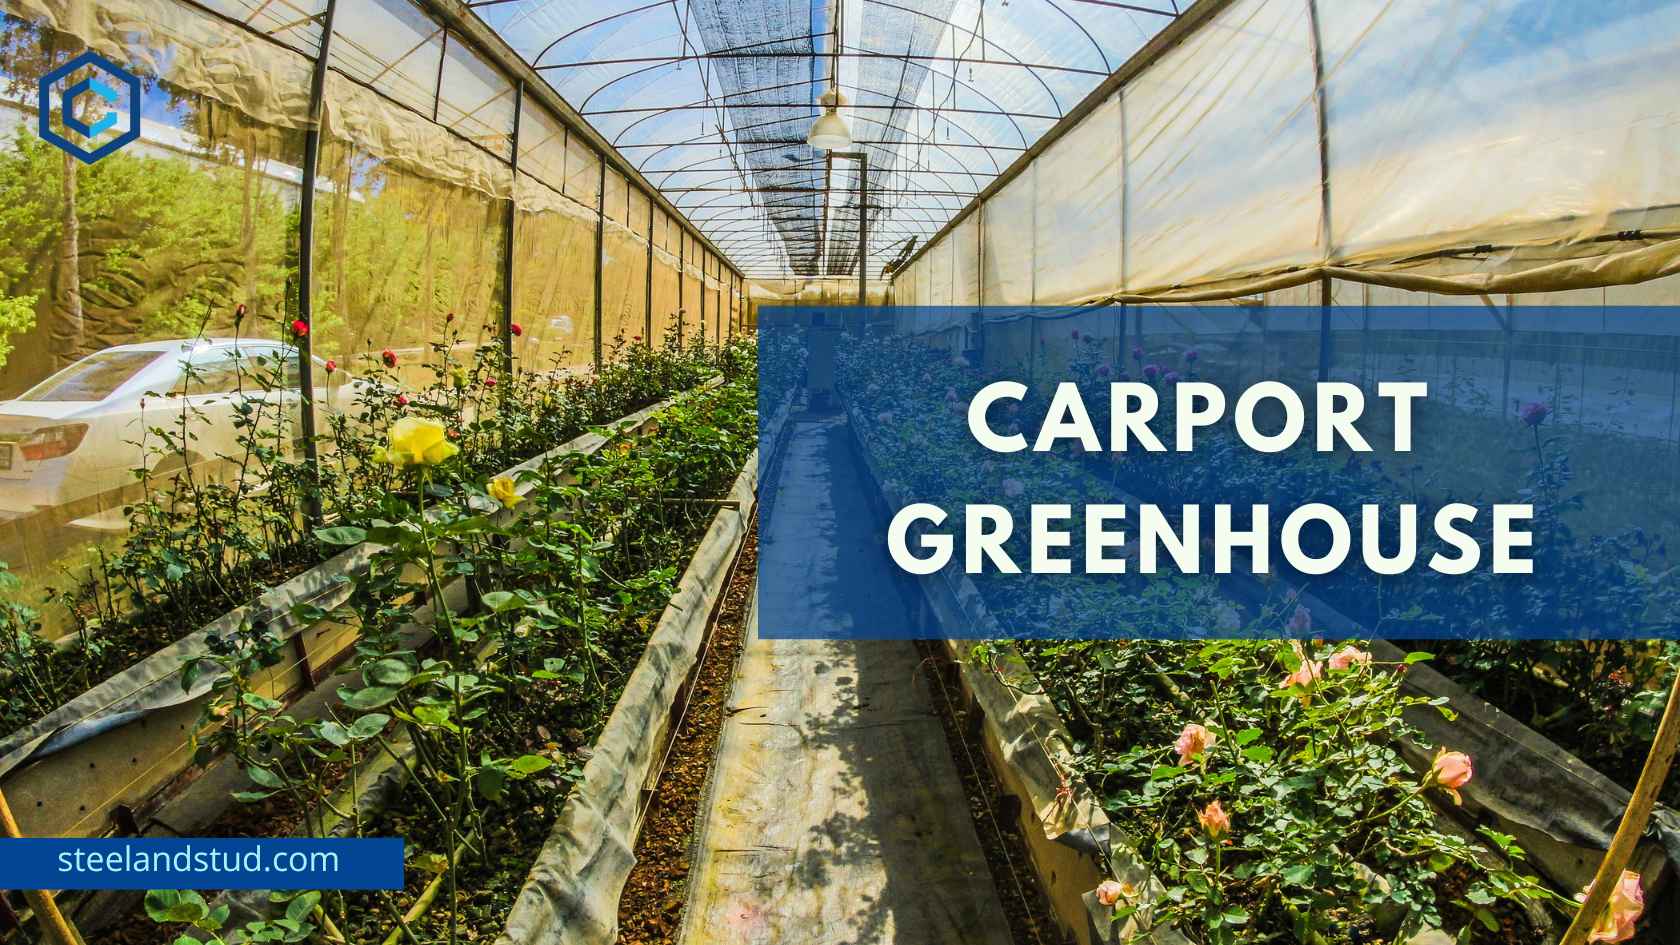 Carport Greenhouse